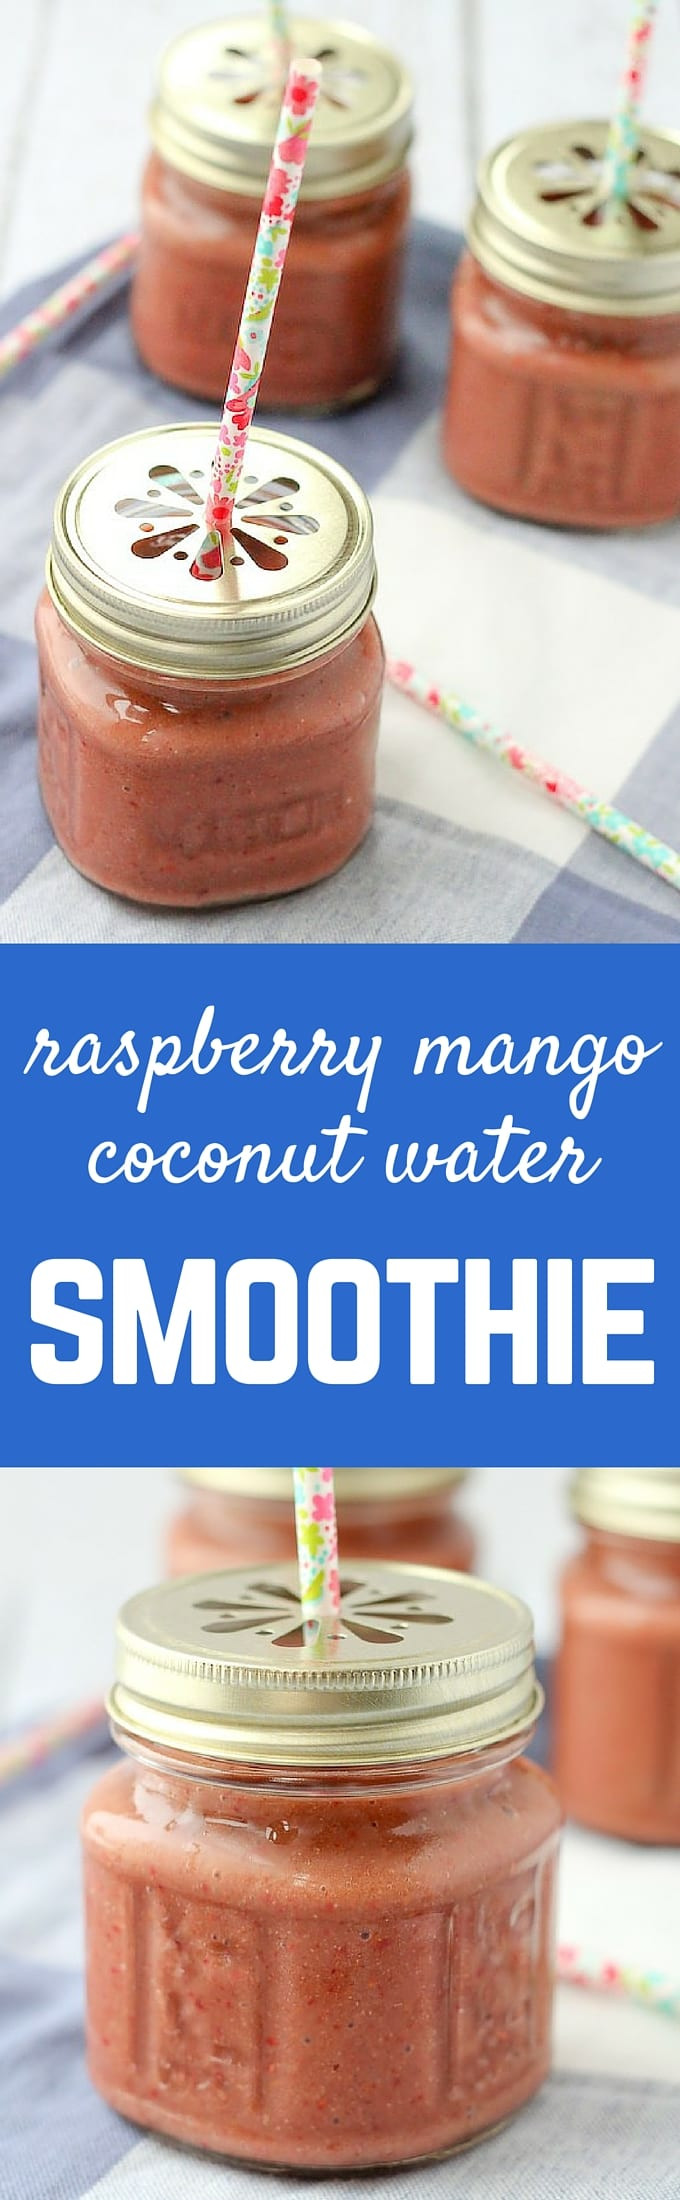 Coconut Water Smoothie Recipes
 Raspberry Mango Coconut Water Smoothie Rachel Cooks